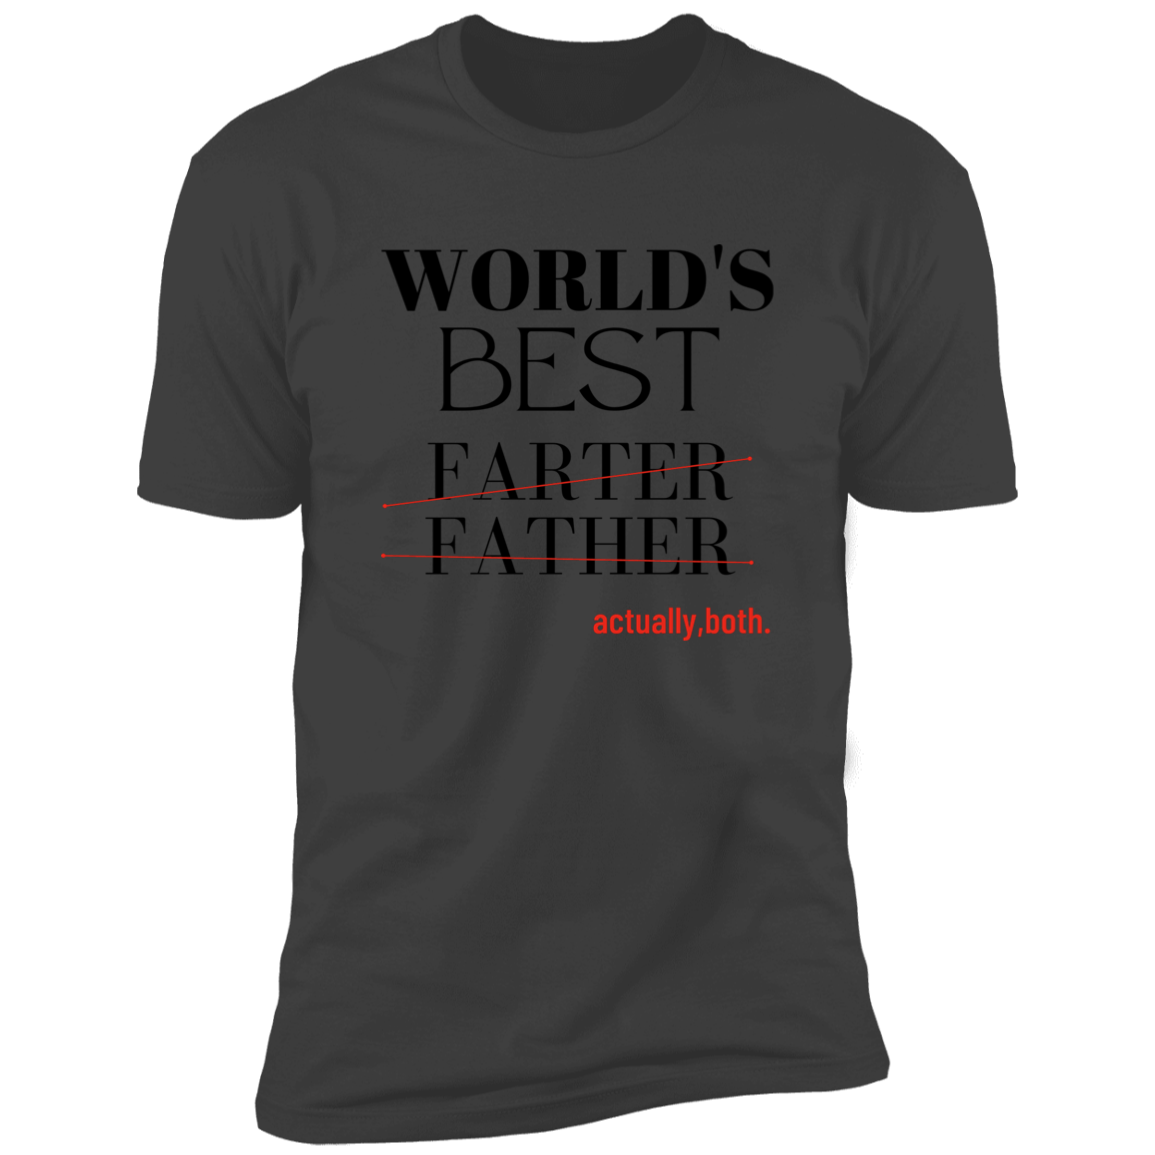 WORLD'S BEST FATHER Premium Short Sleeve Tee